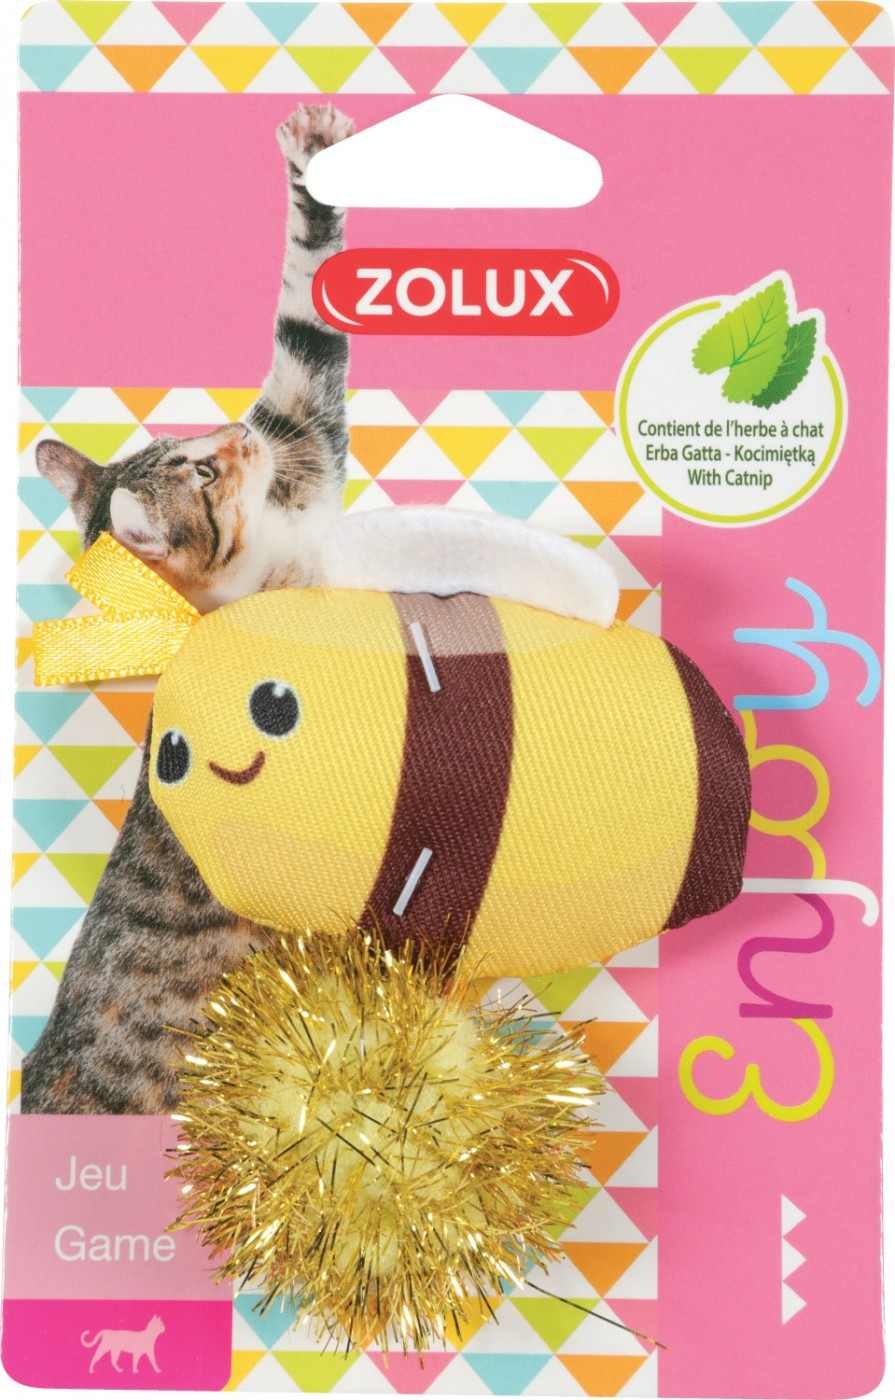 Zolux Juguete gato Lovely con hierba para gatos - Abeja